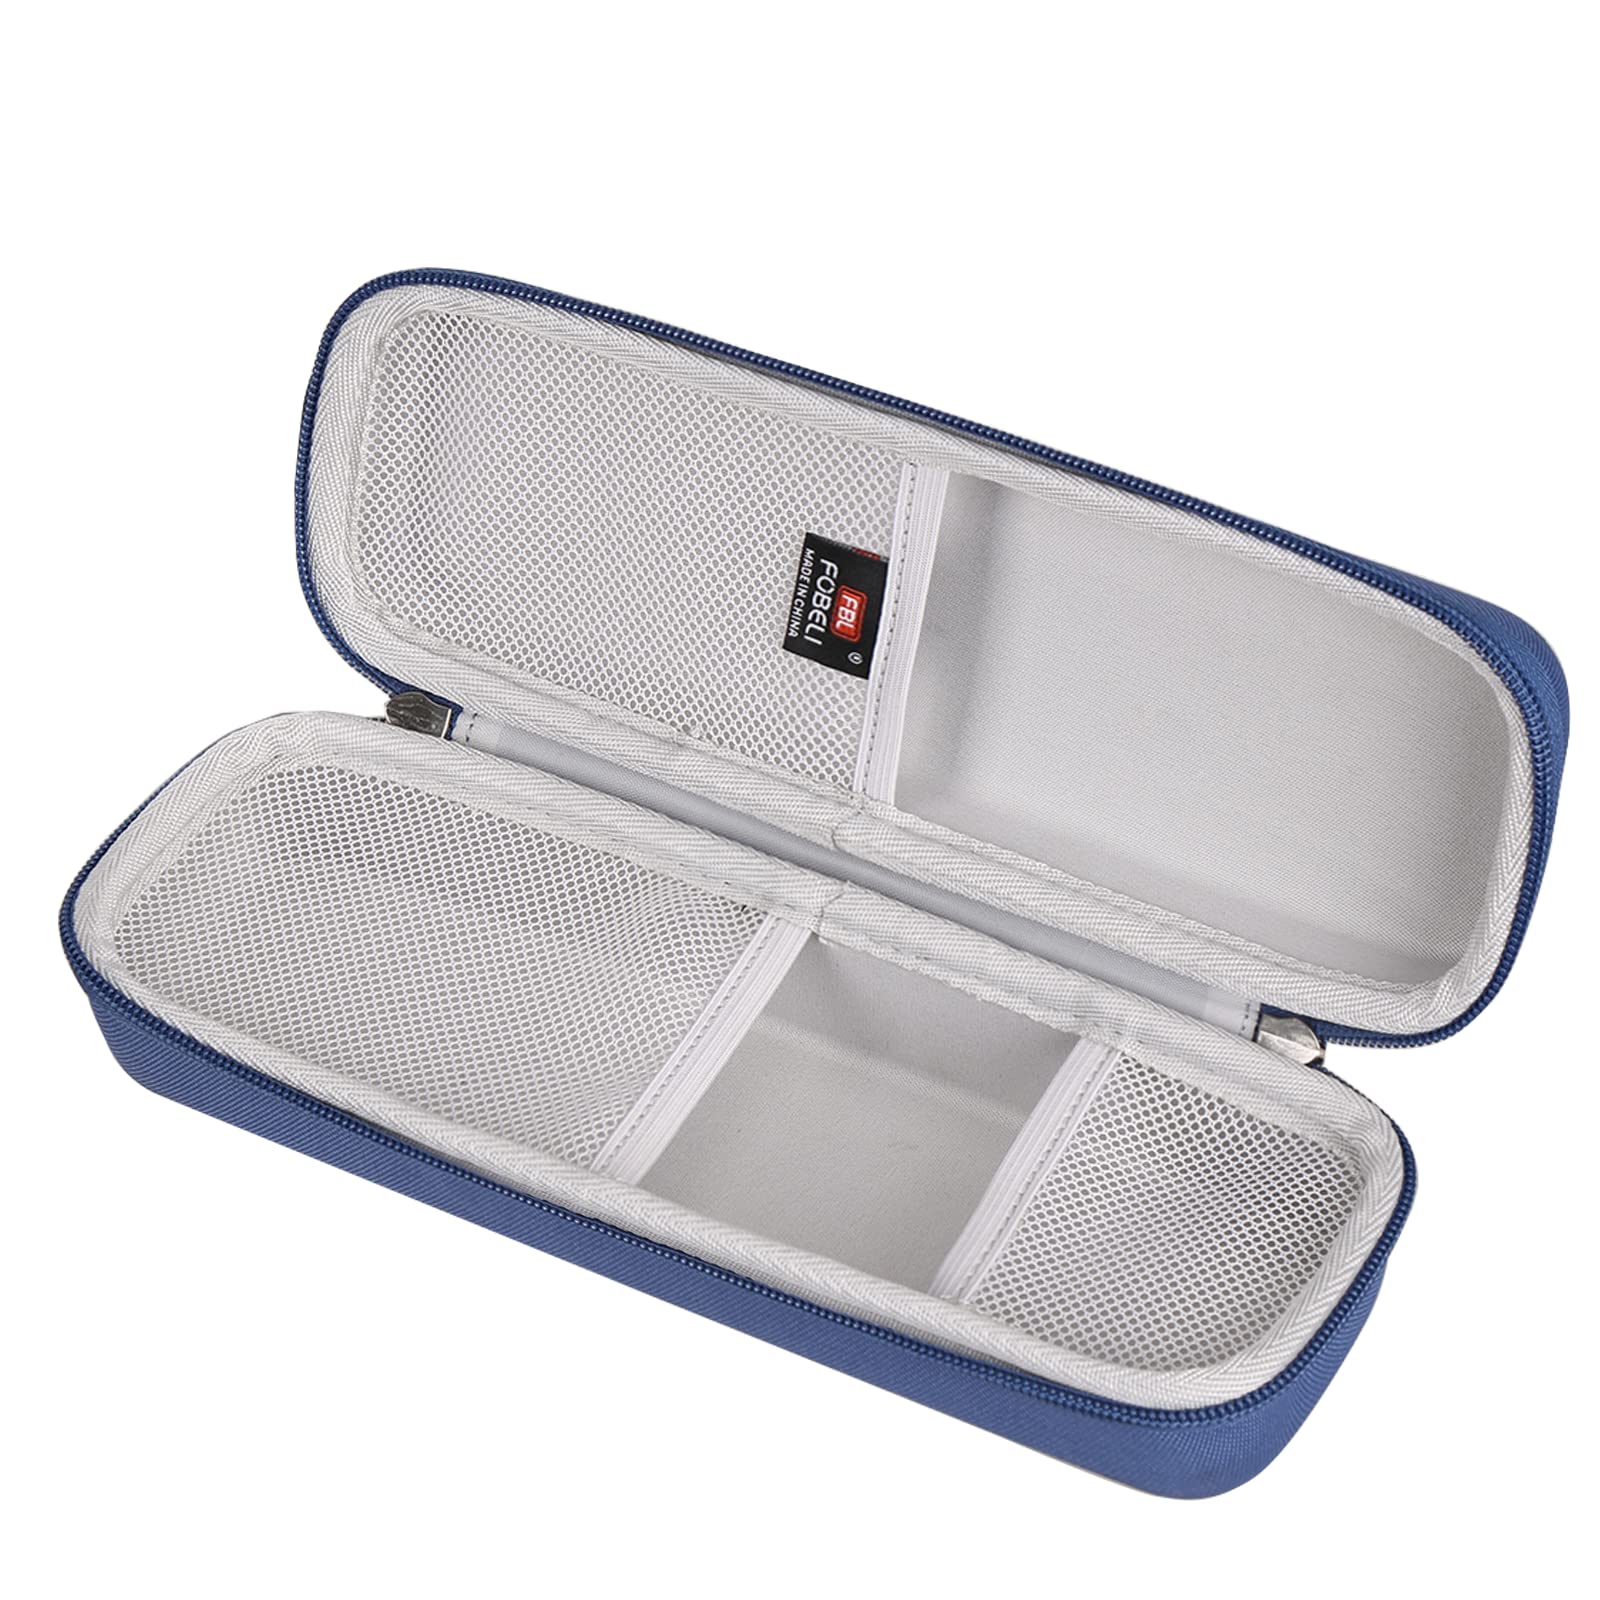 FBLFOBELI EVA Travel Carrying Case for Fluke Networks 26000900 Pro3000 Tone Generator and Probe Kit, Storage Organizer Bag (Case Only)